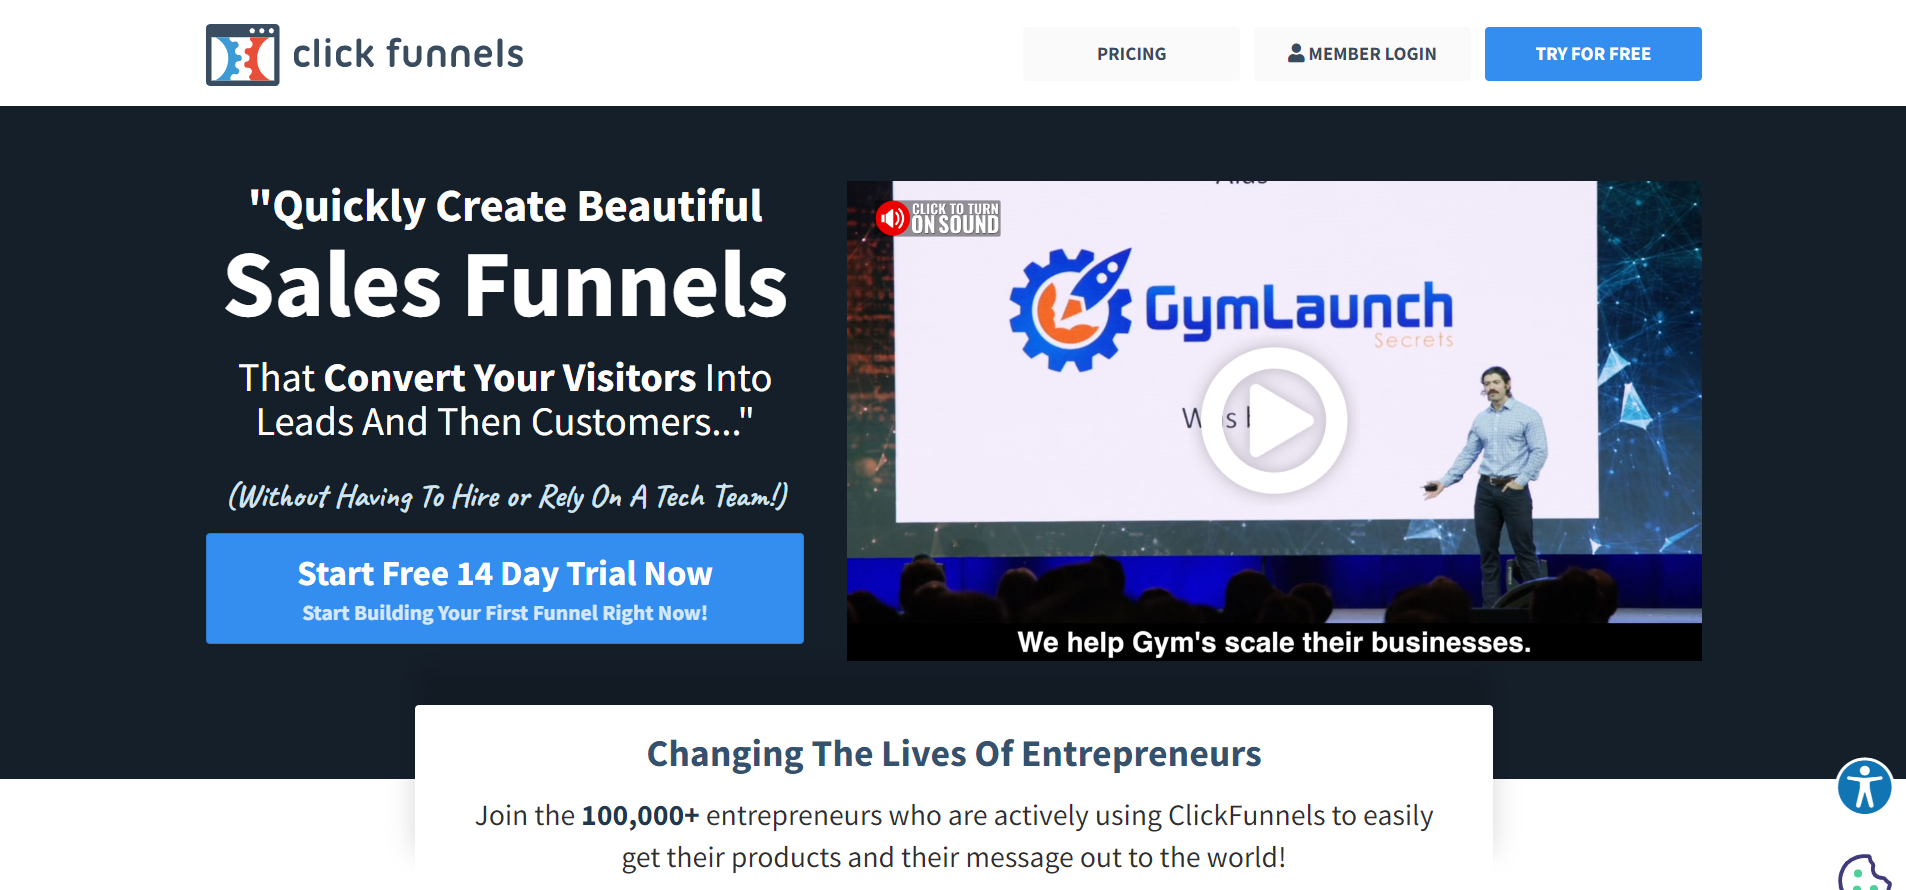 ClickFunnels Marketing Funnels Made Easy